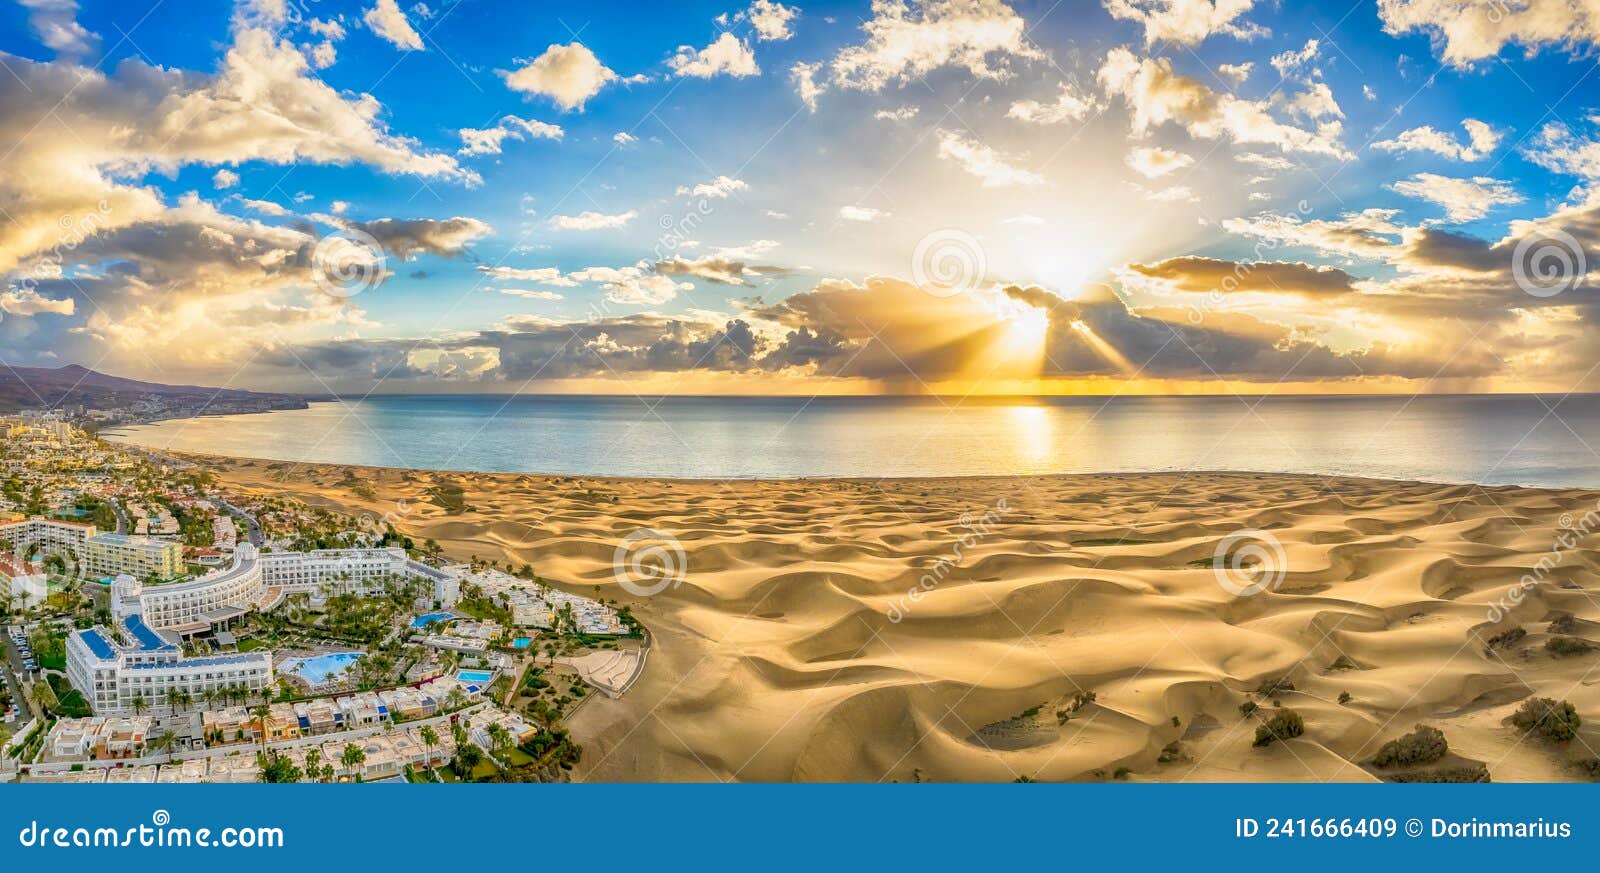 landscape with maspalomas sand dunes at sunrise, gran canaria